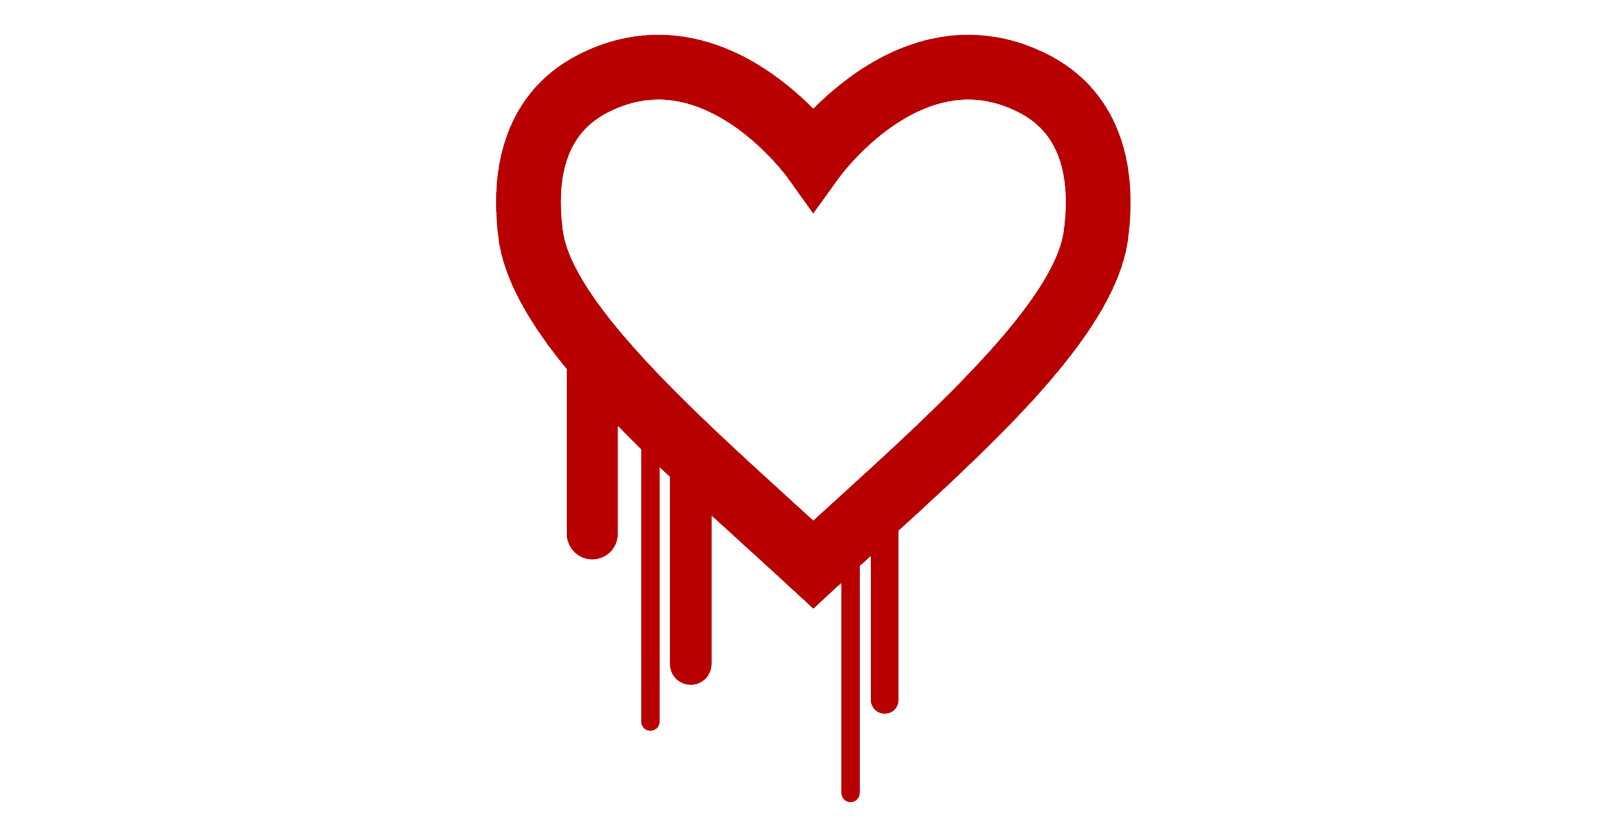 The Heartbleed Vulnerability: CVE-2014-0160